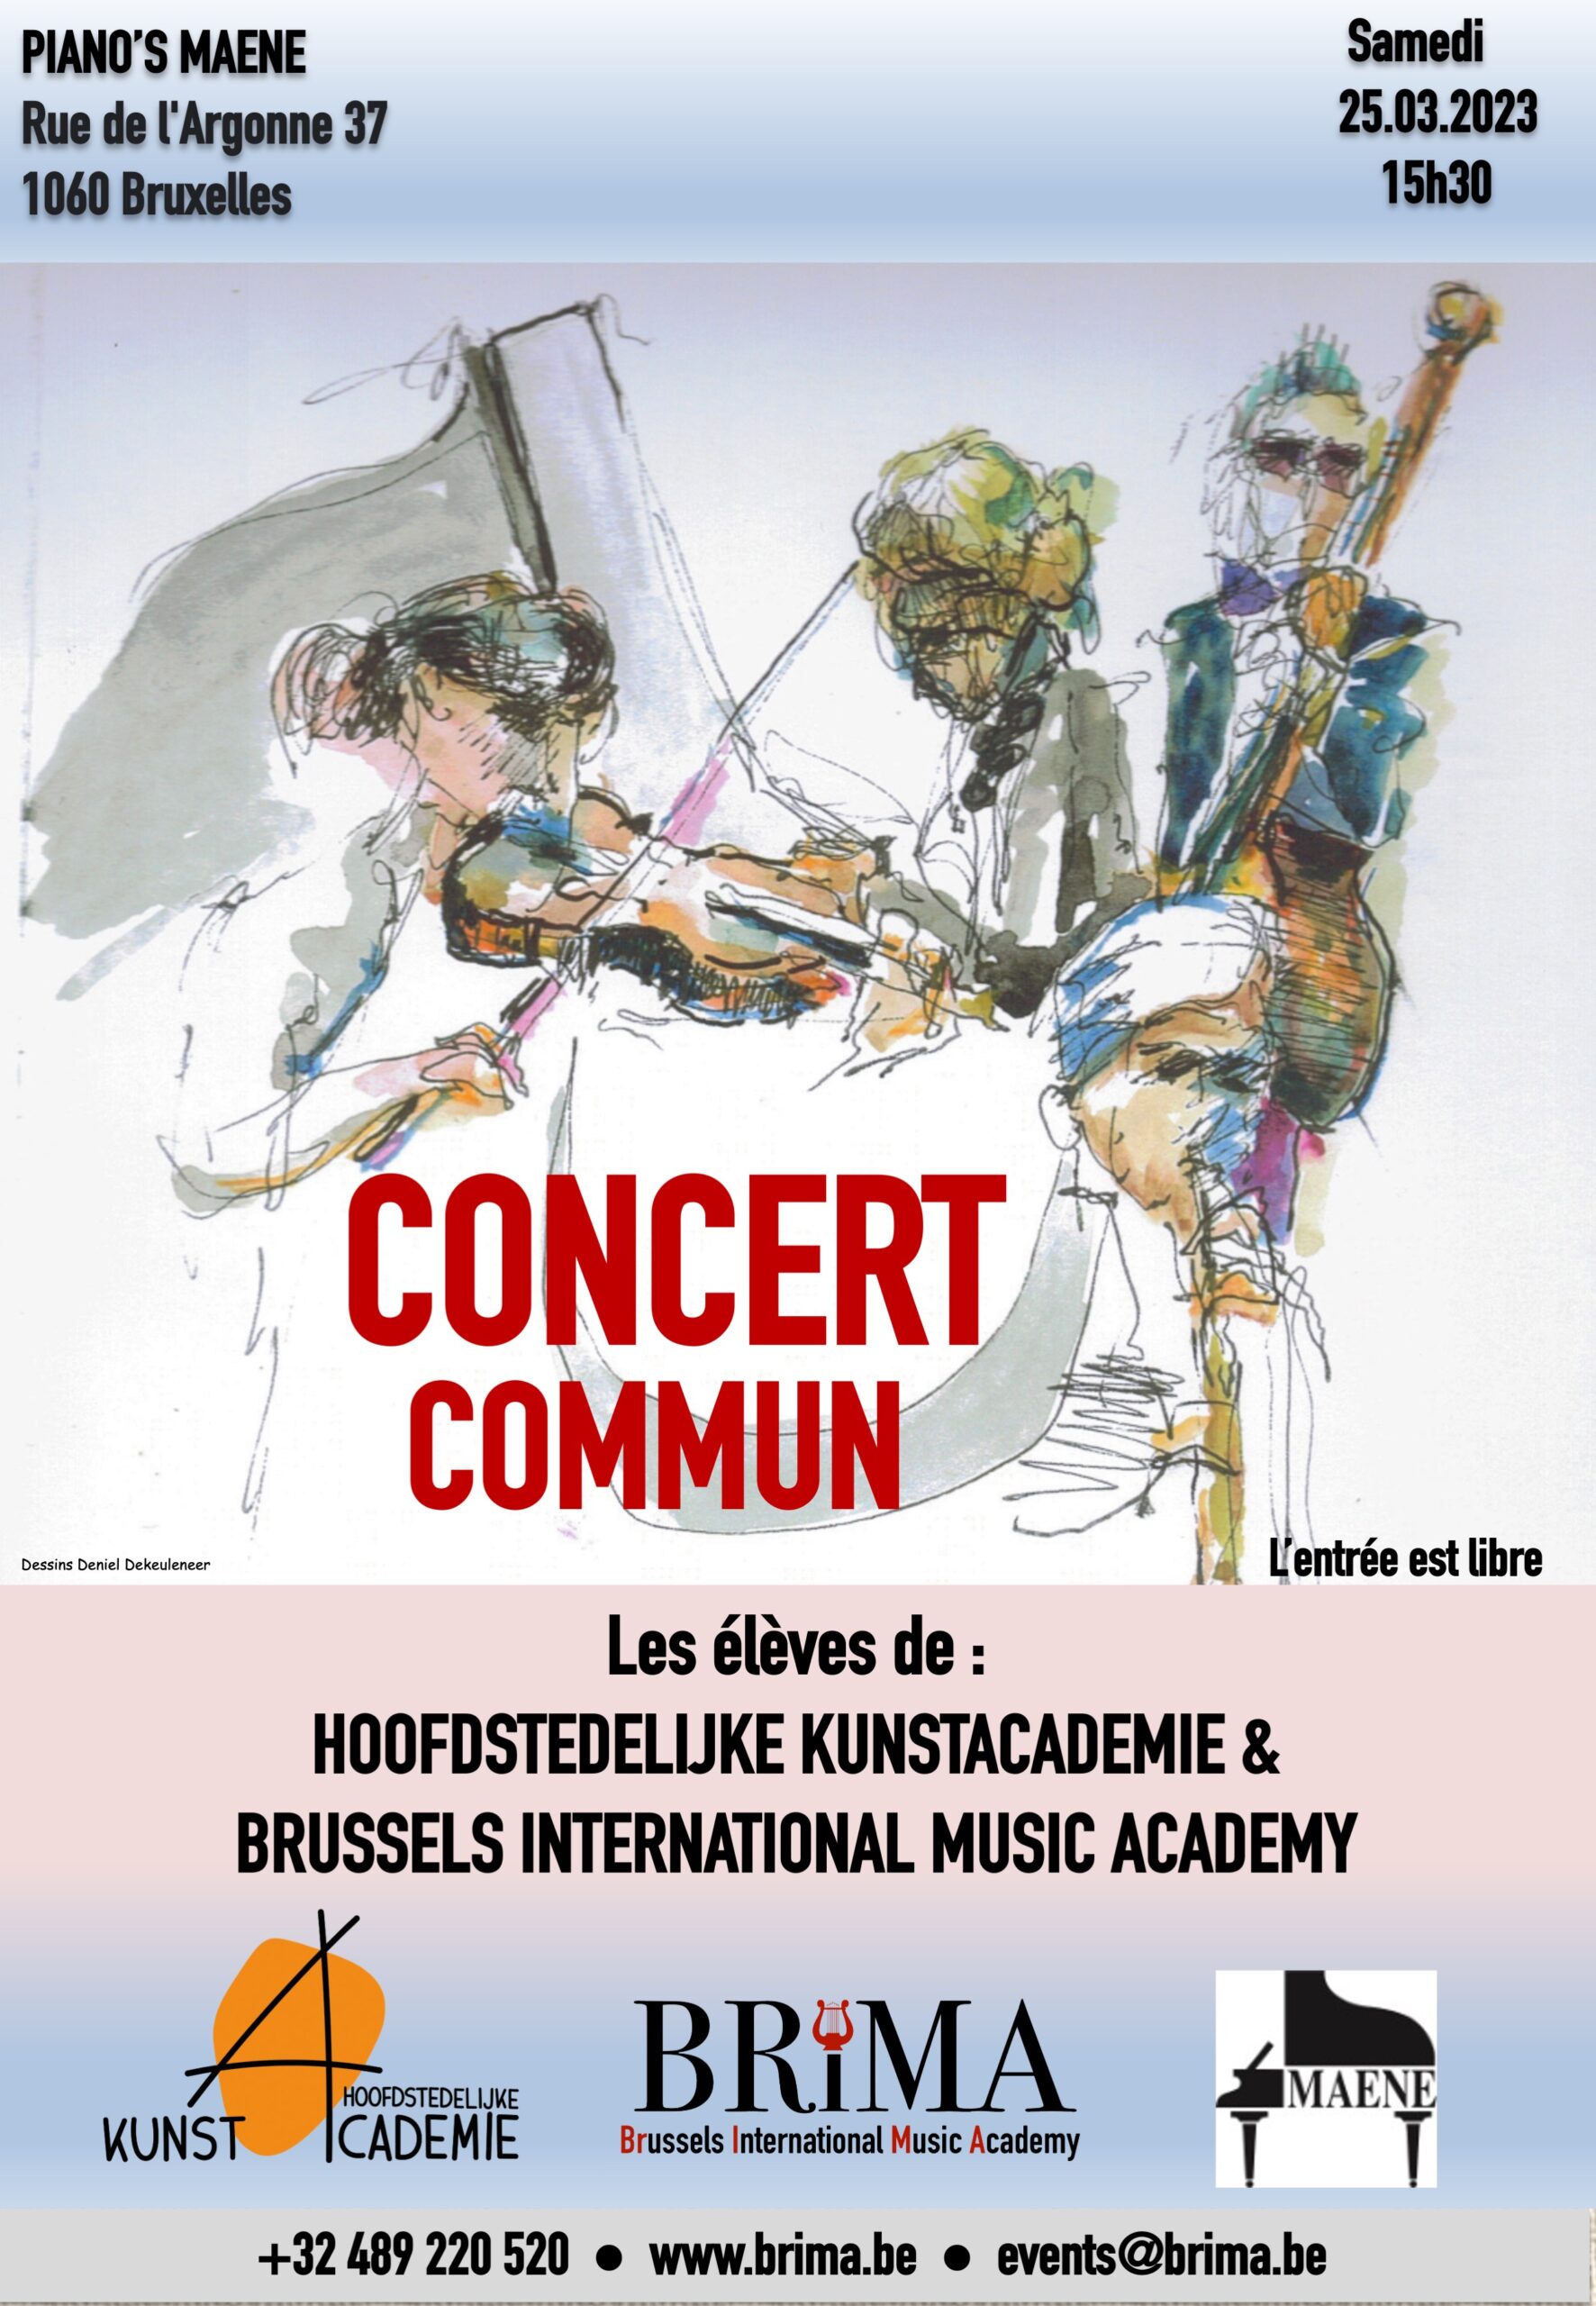 25 03 2023 Concert BRIMA & Academie FR